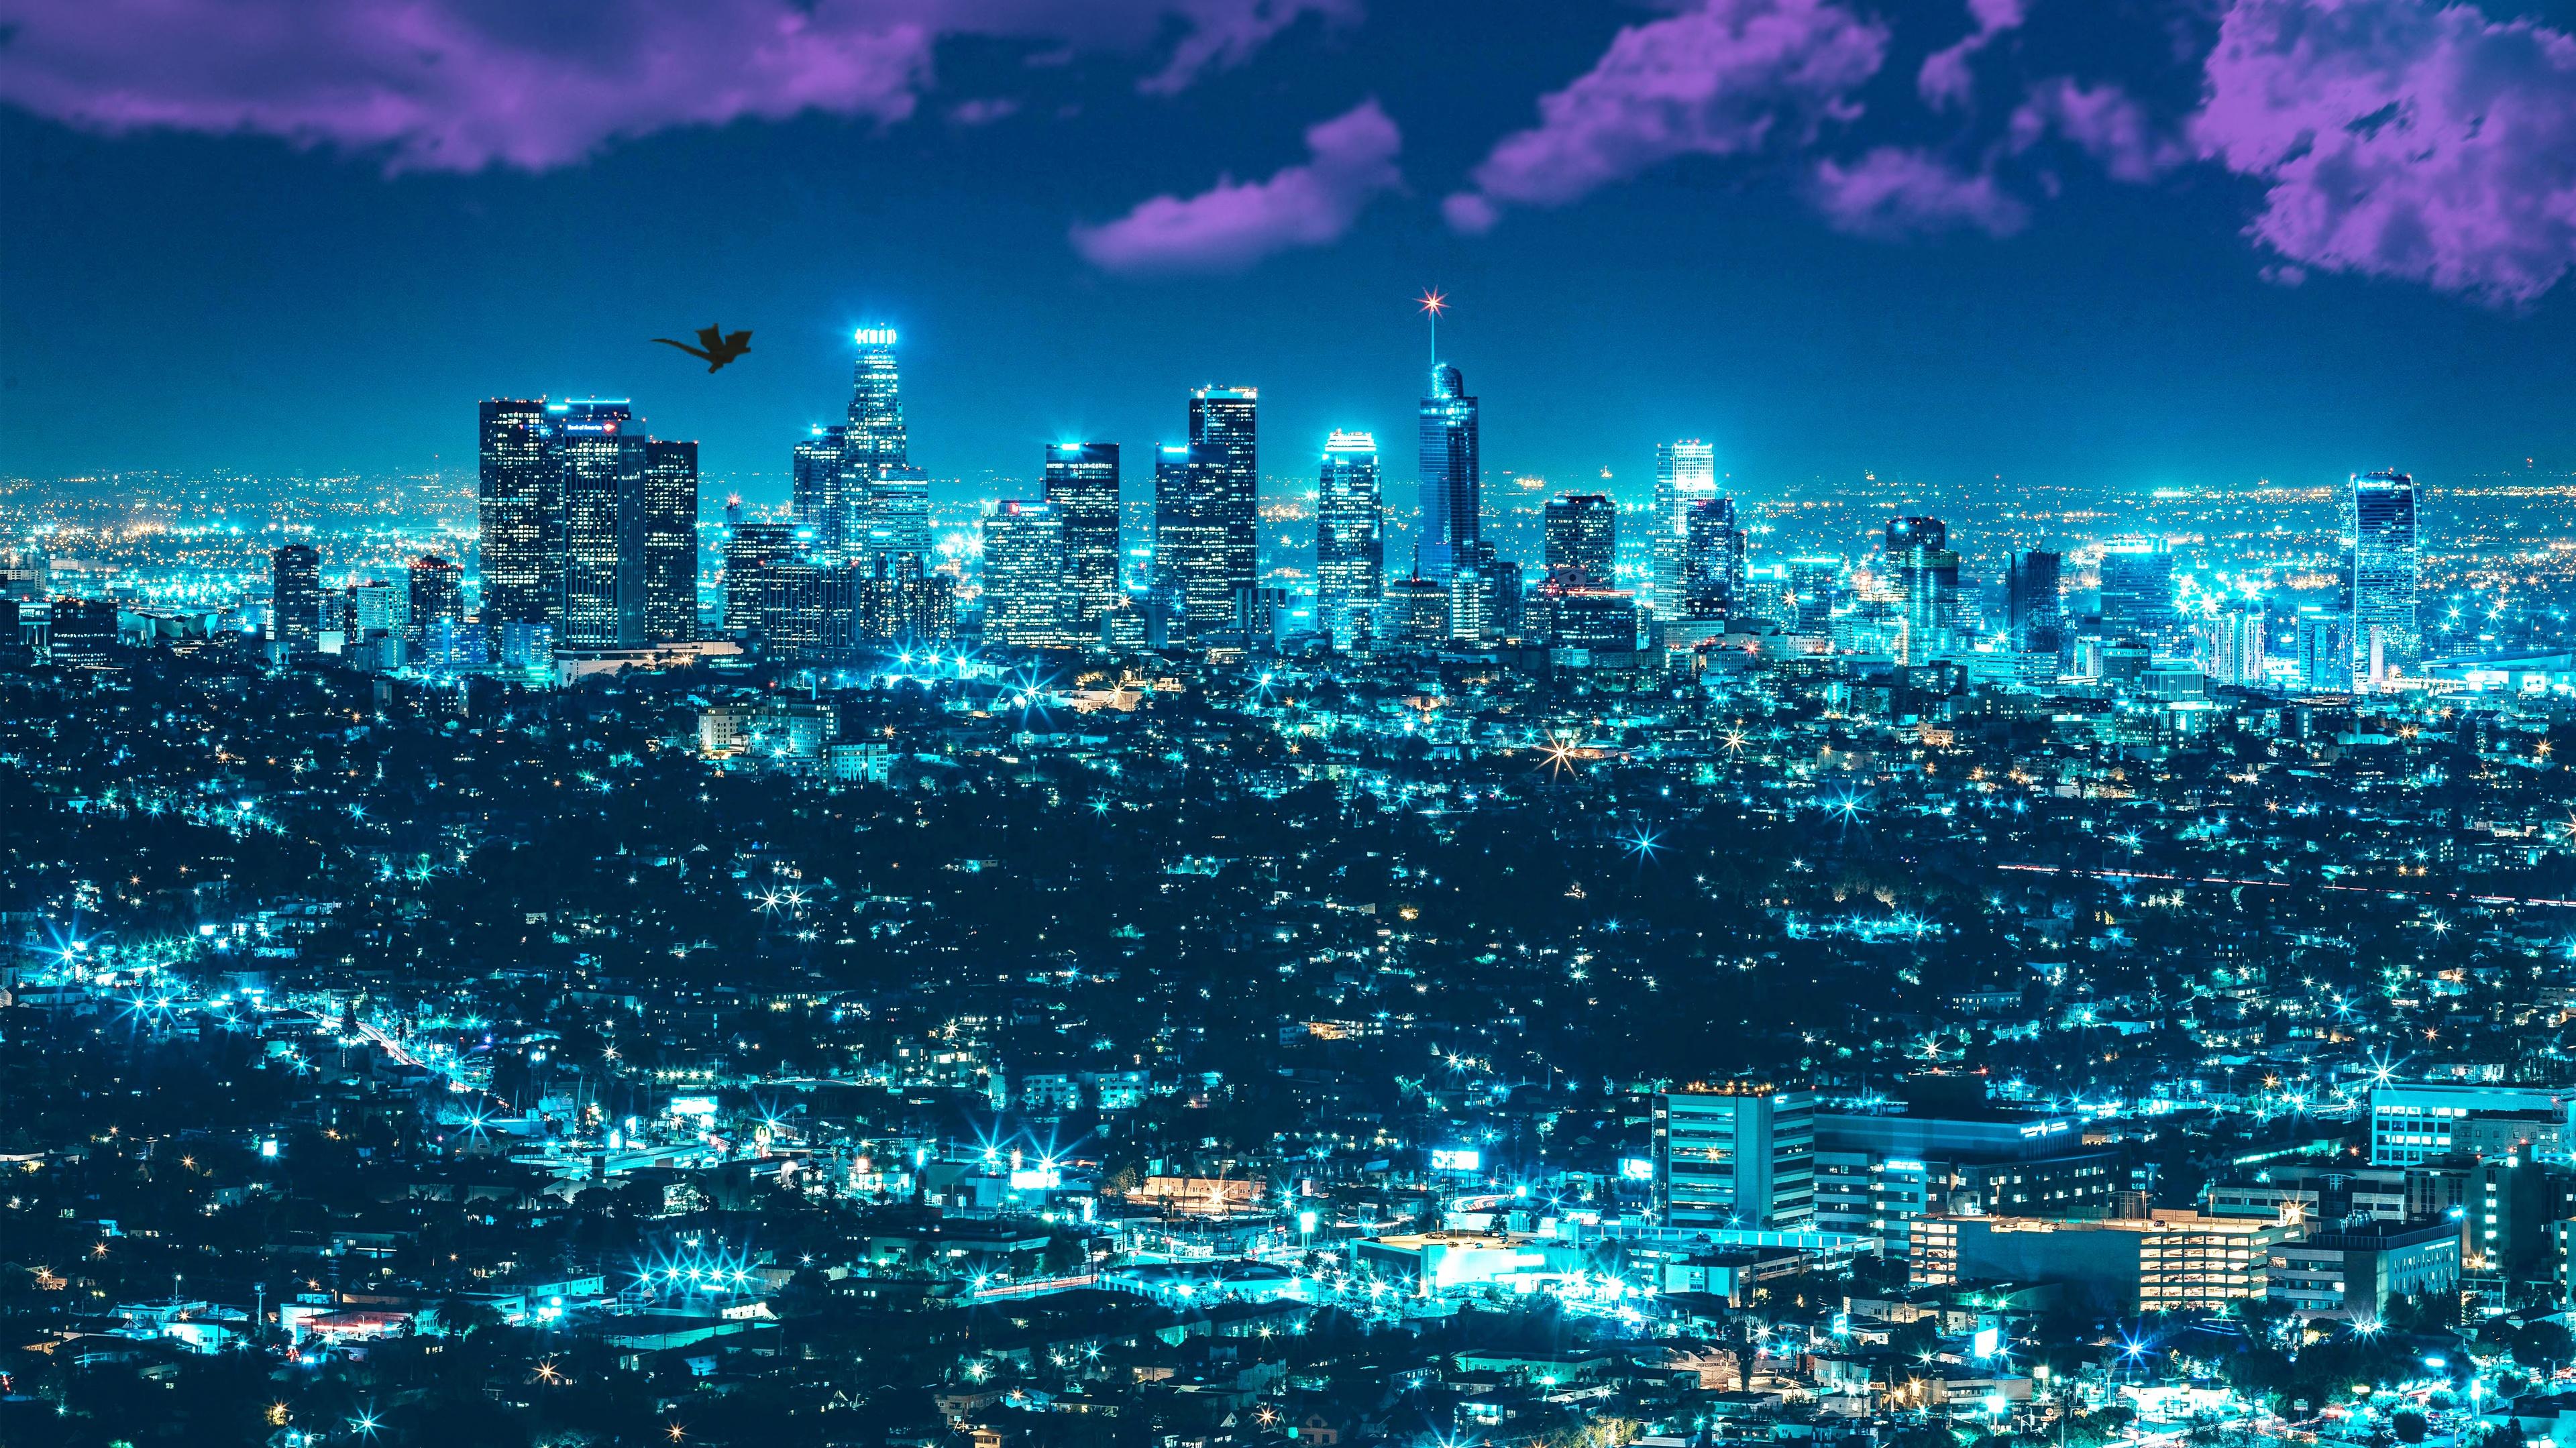 Los Angeles Cityscape Night City Buildings Digital Art 4k